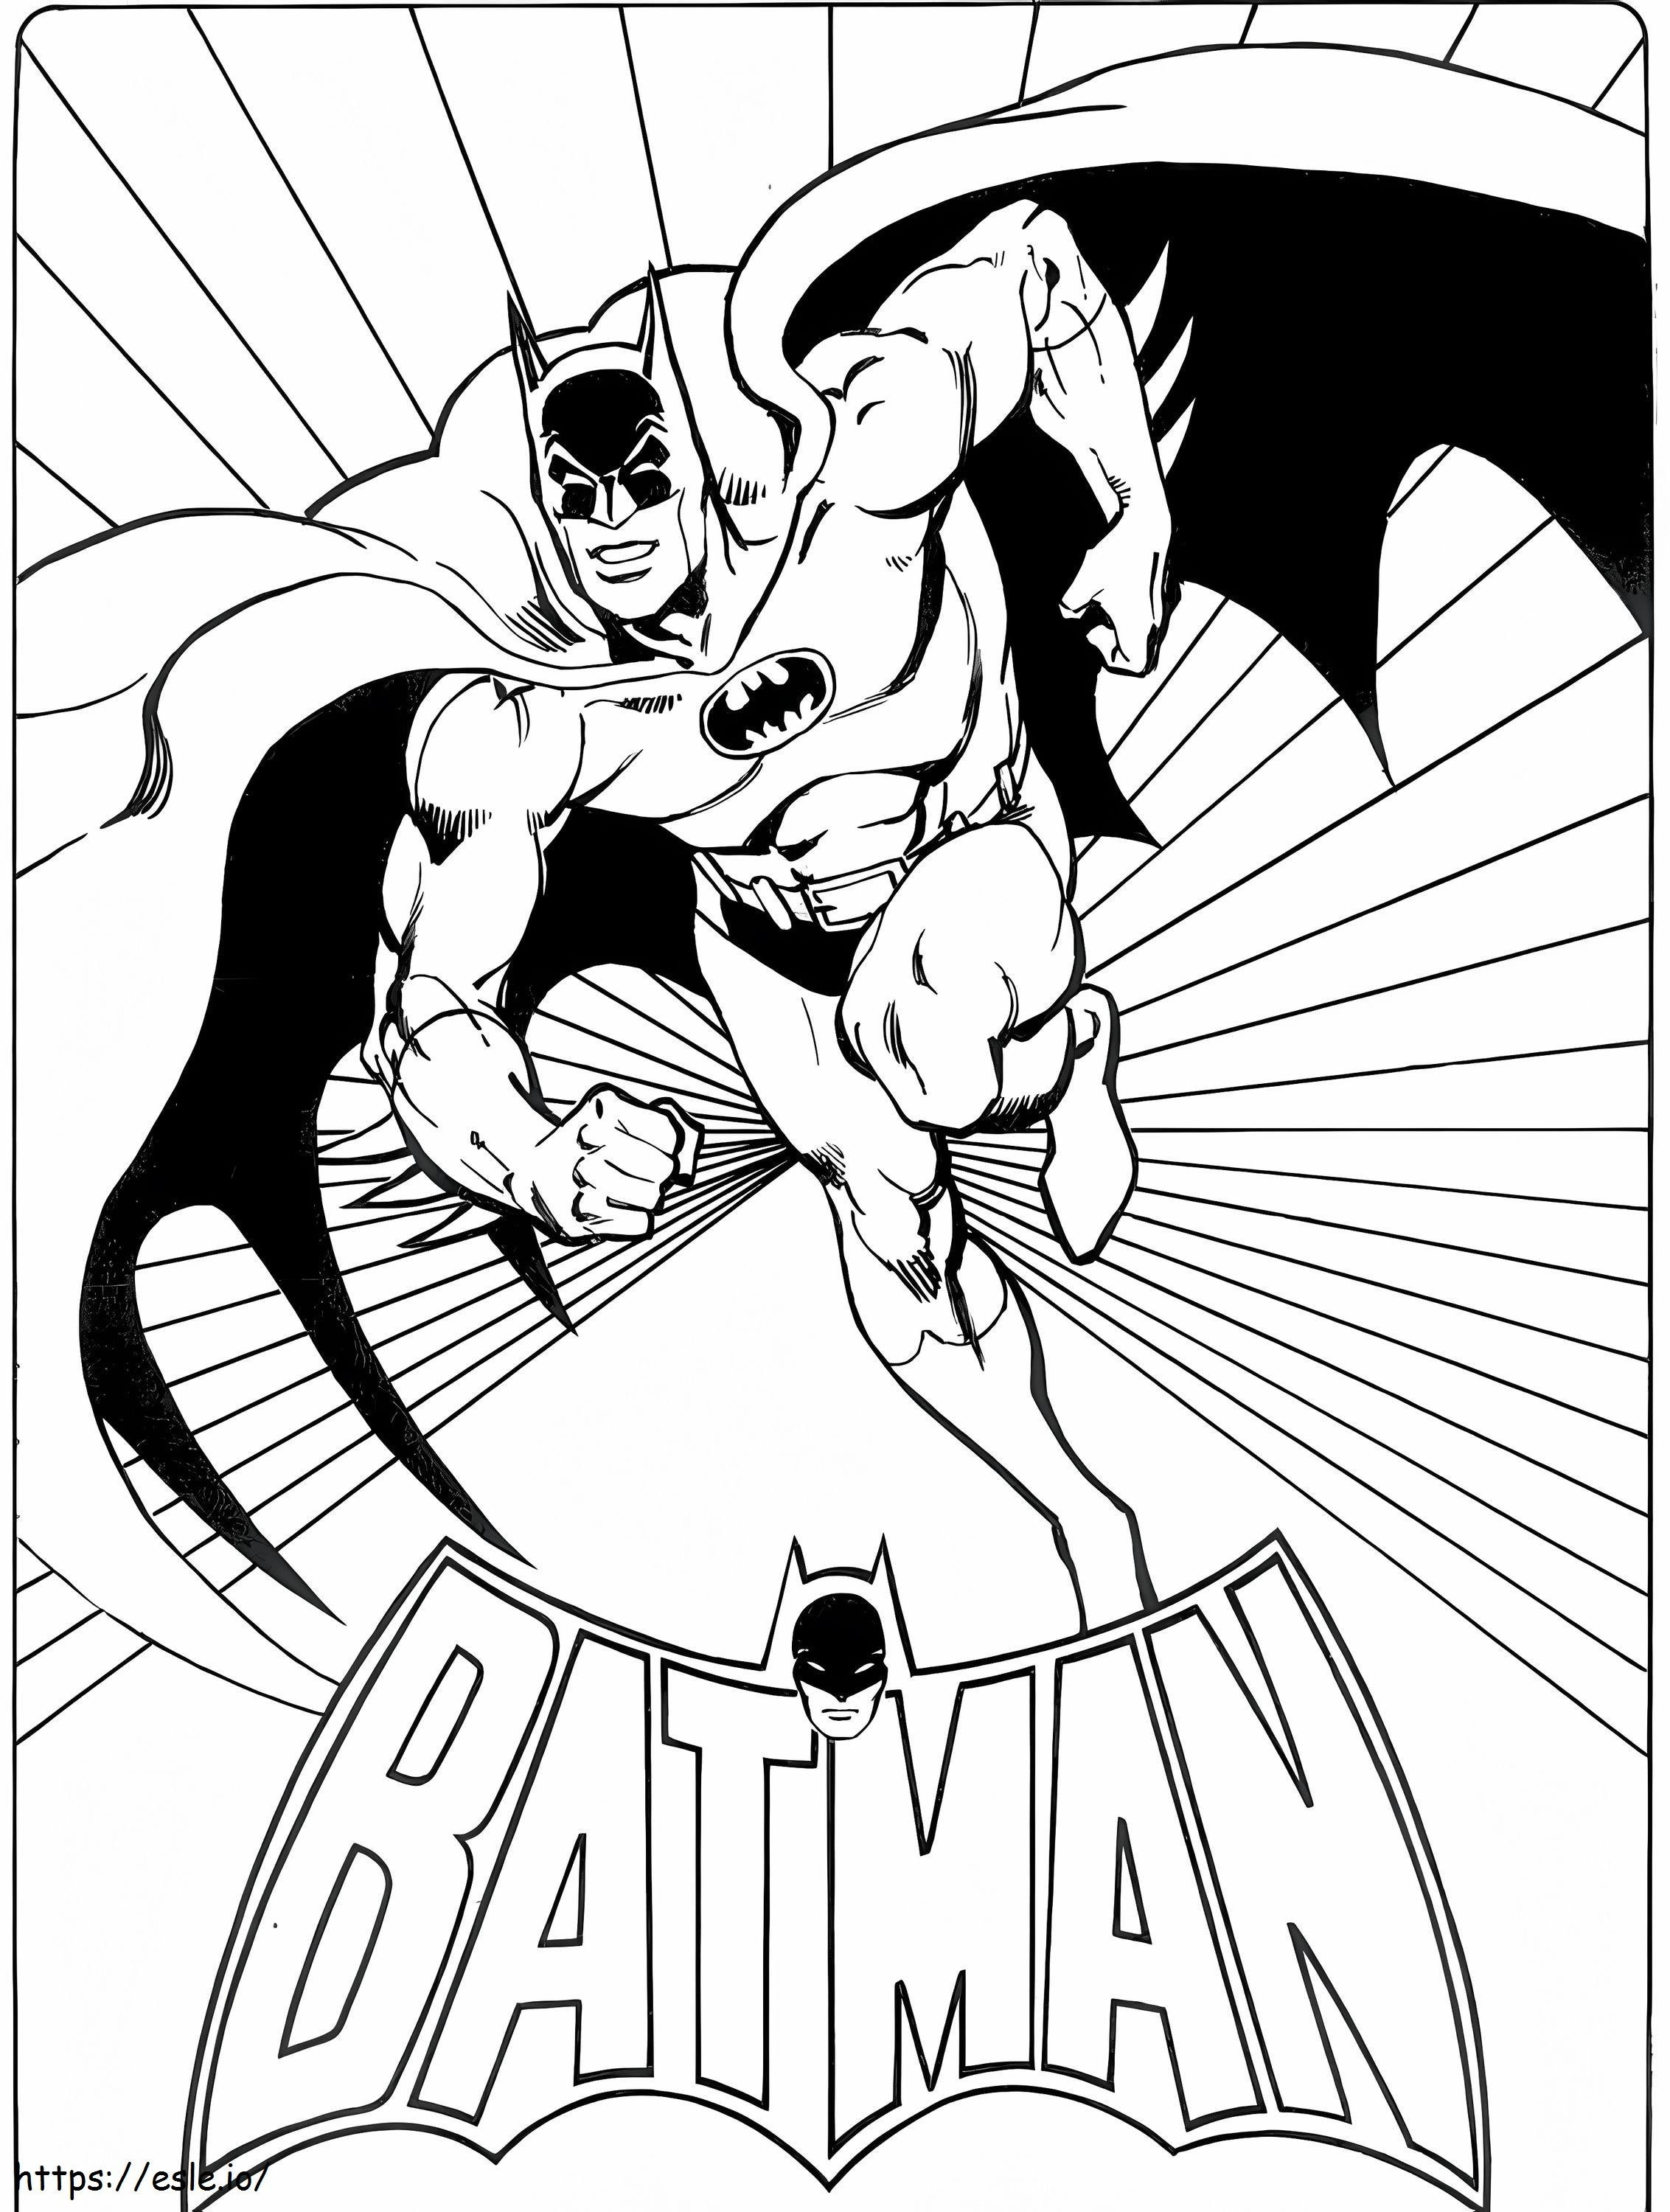 Batman van Gotham kleurplaat kleurplaat